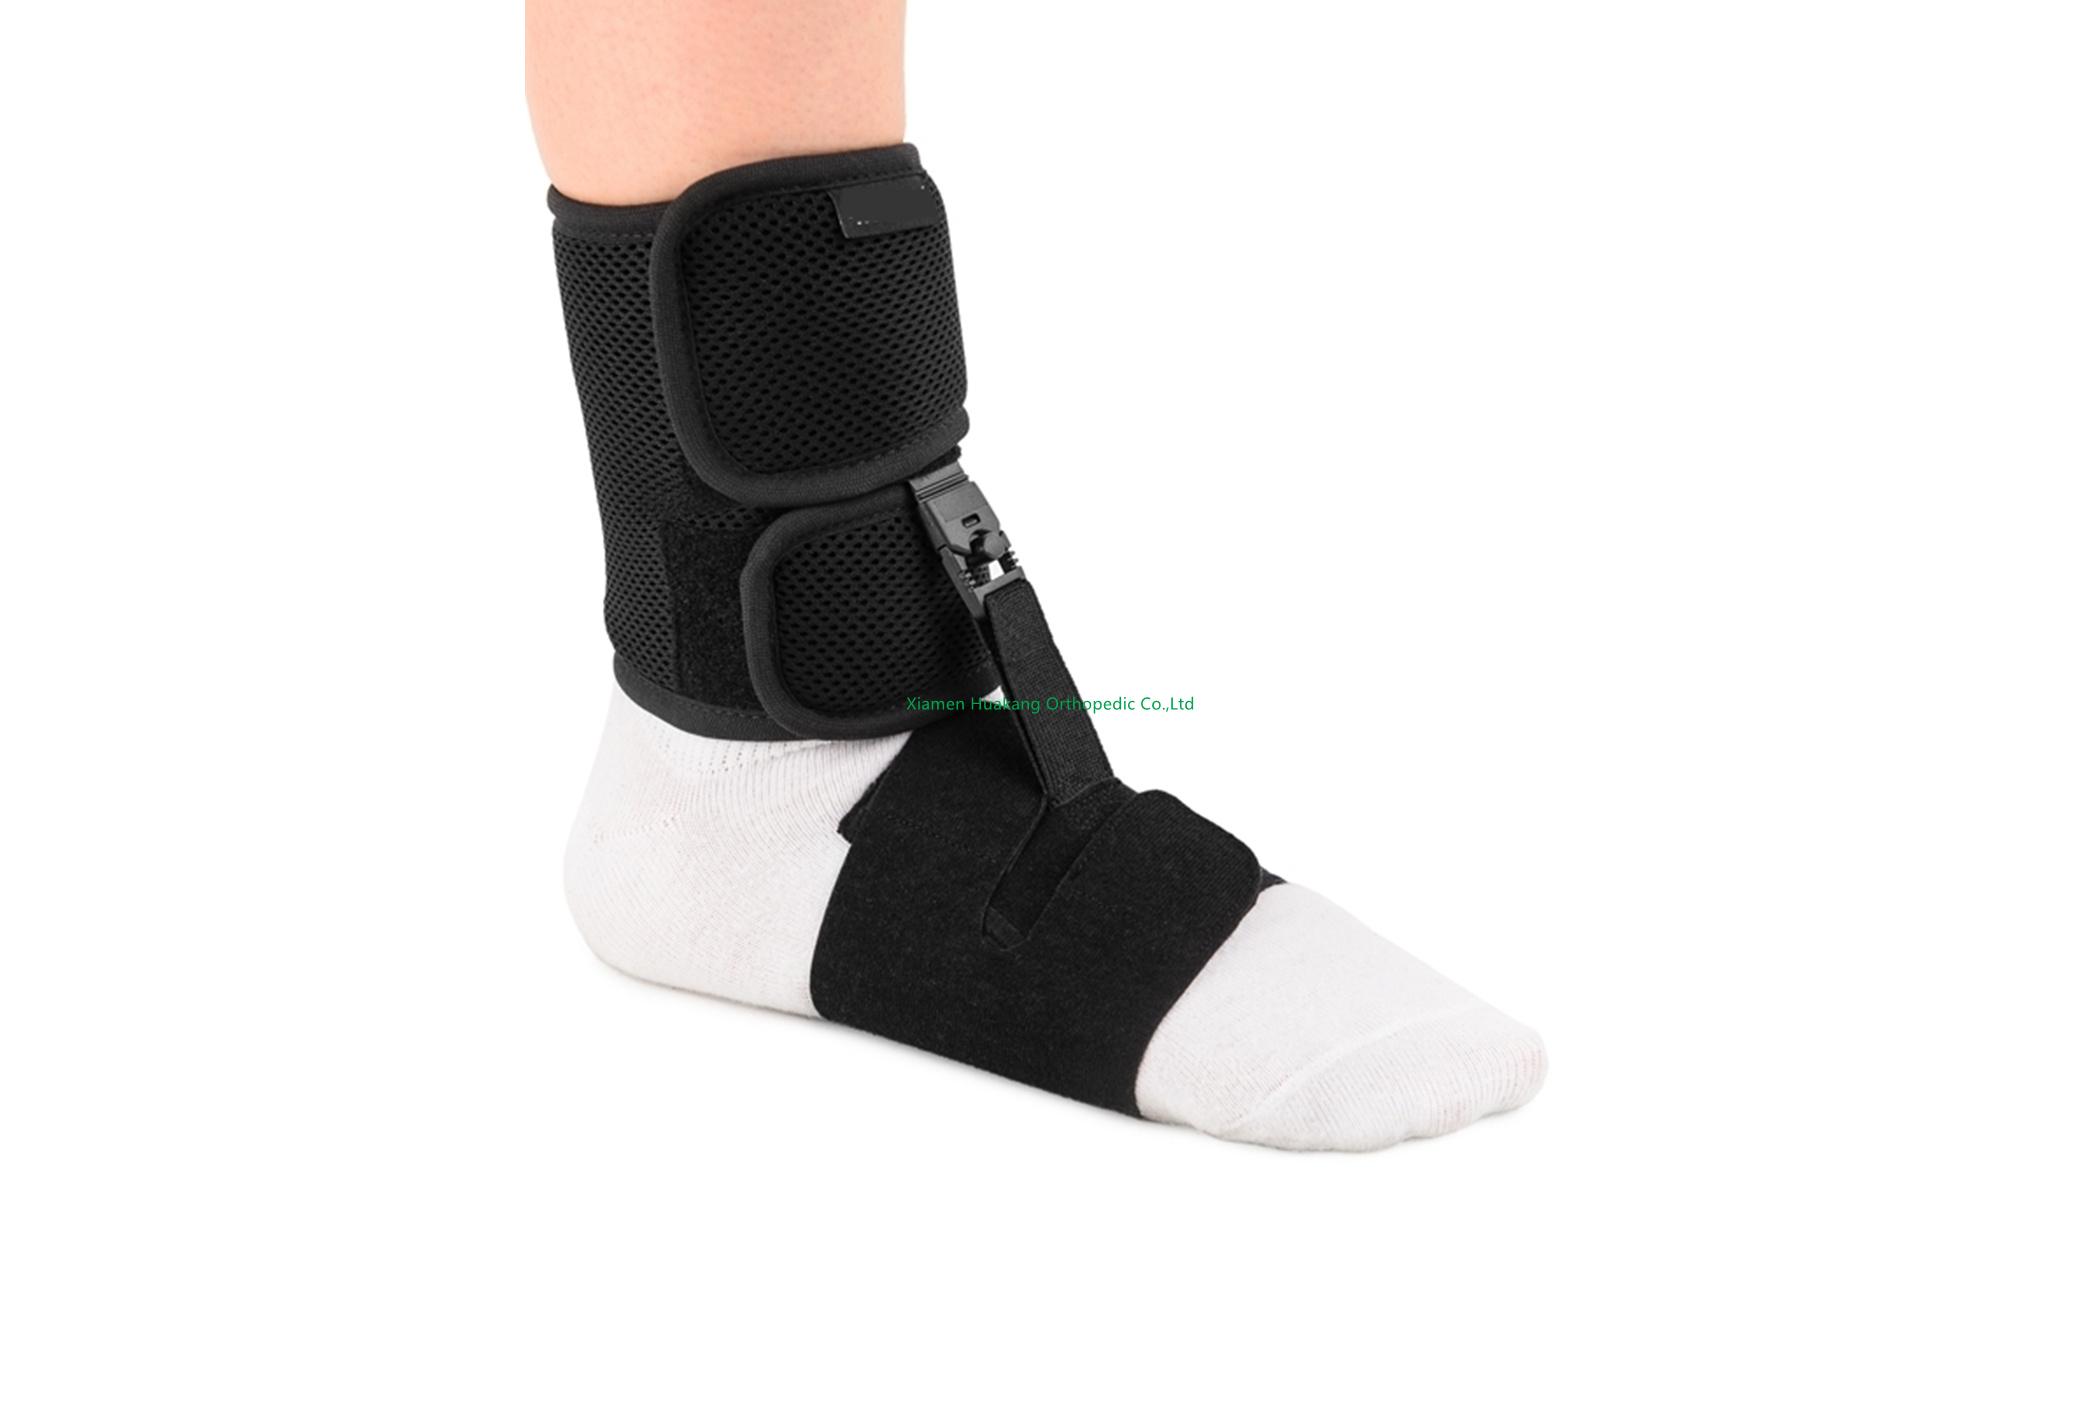  Ankle Dorsal Flexion foot brace manufacturer